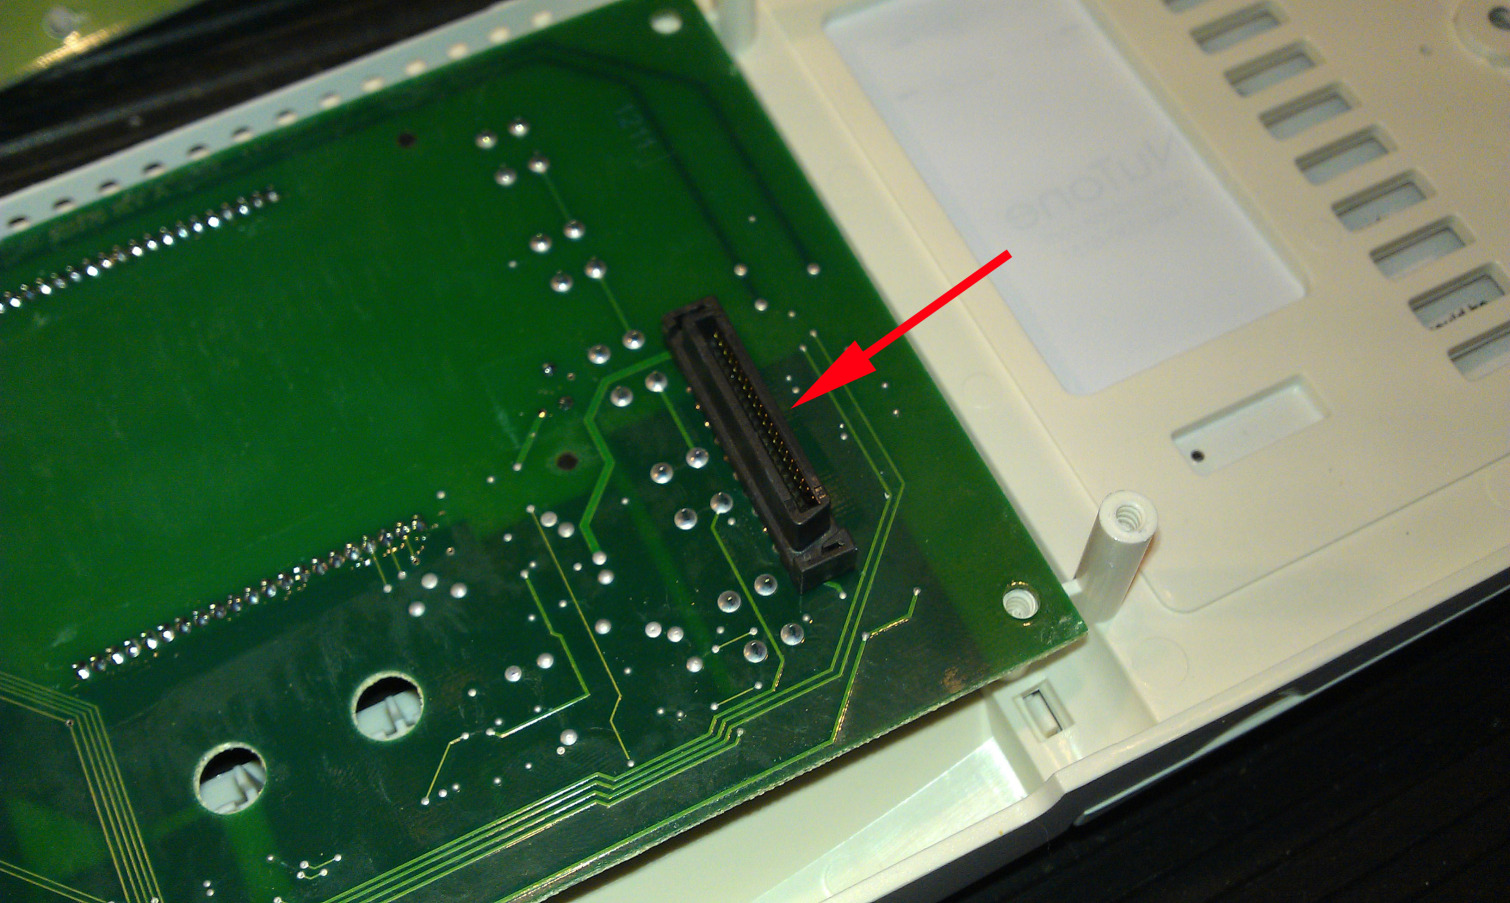 nm200 display board connection socket.jpg